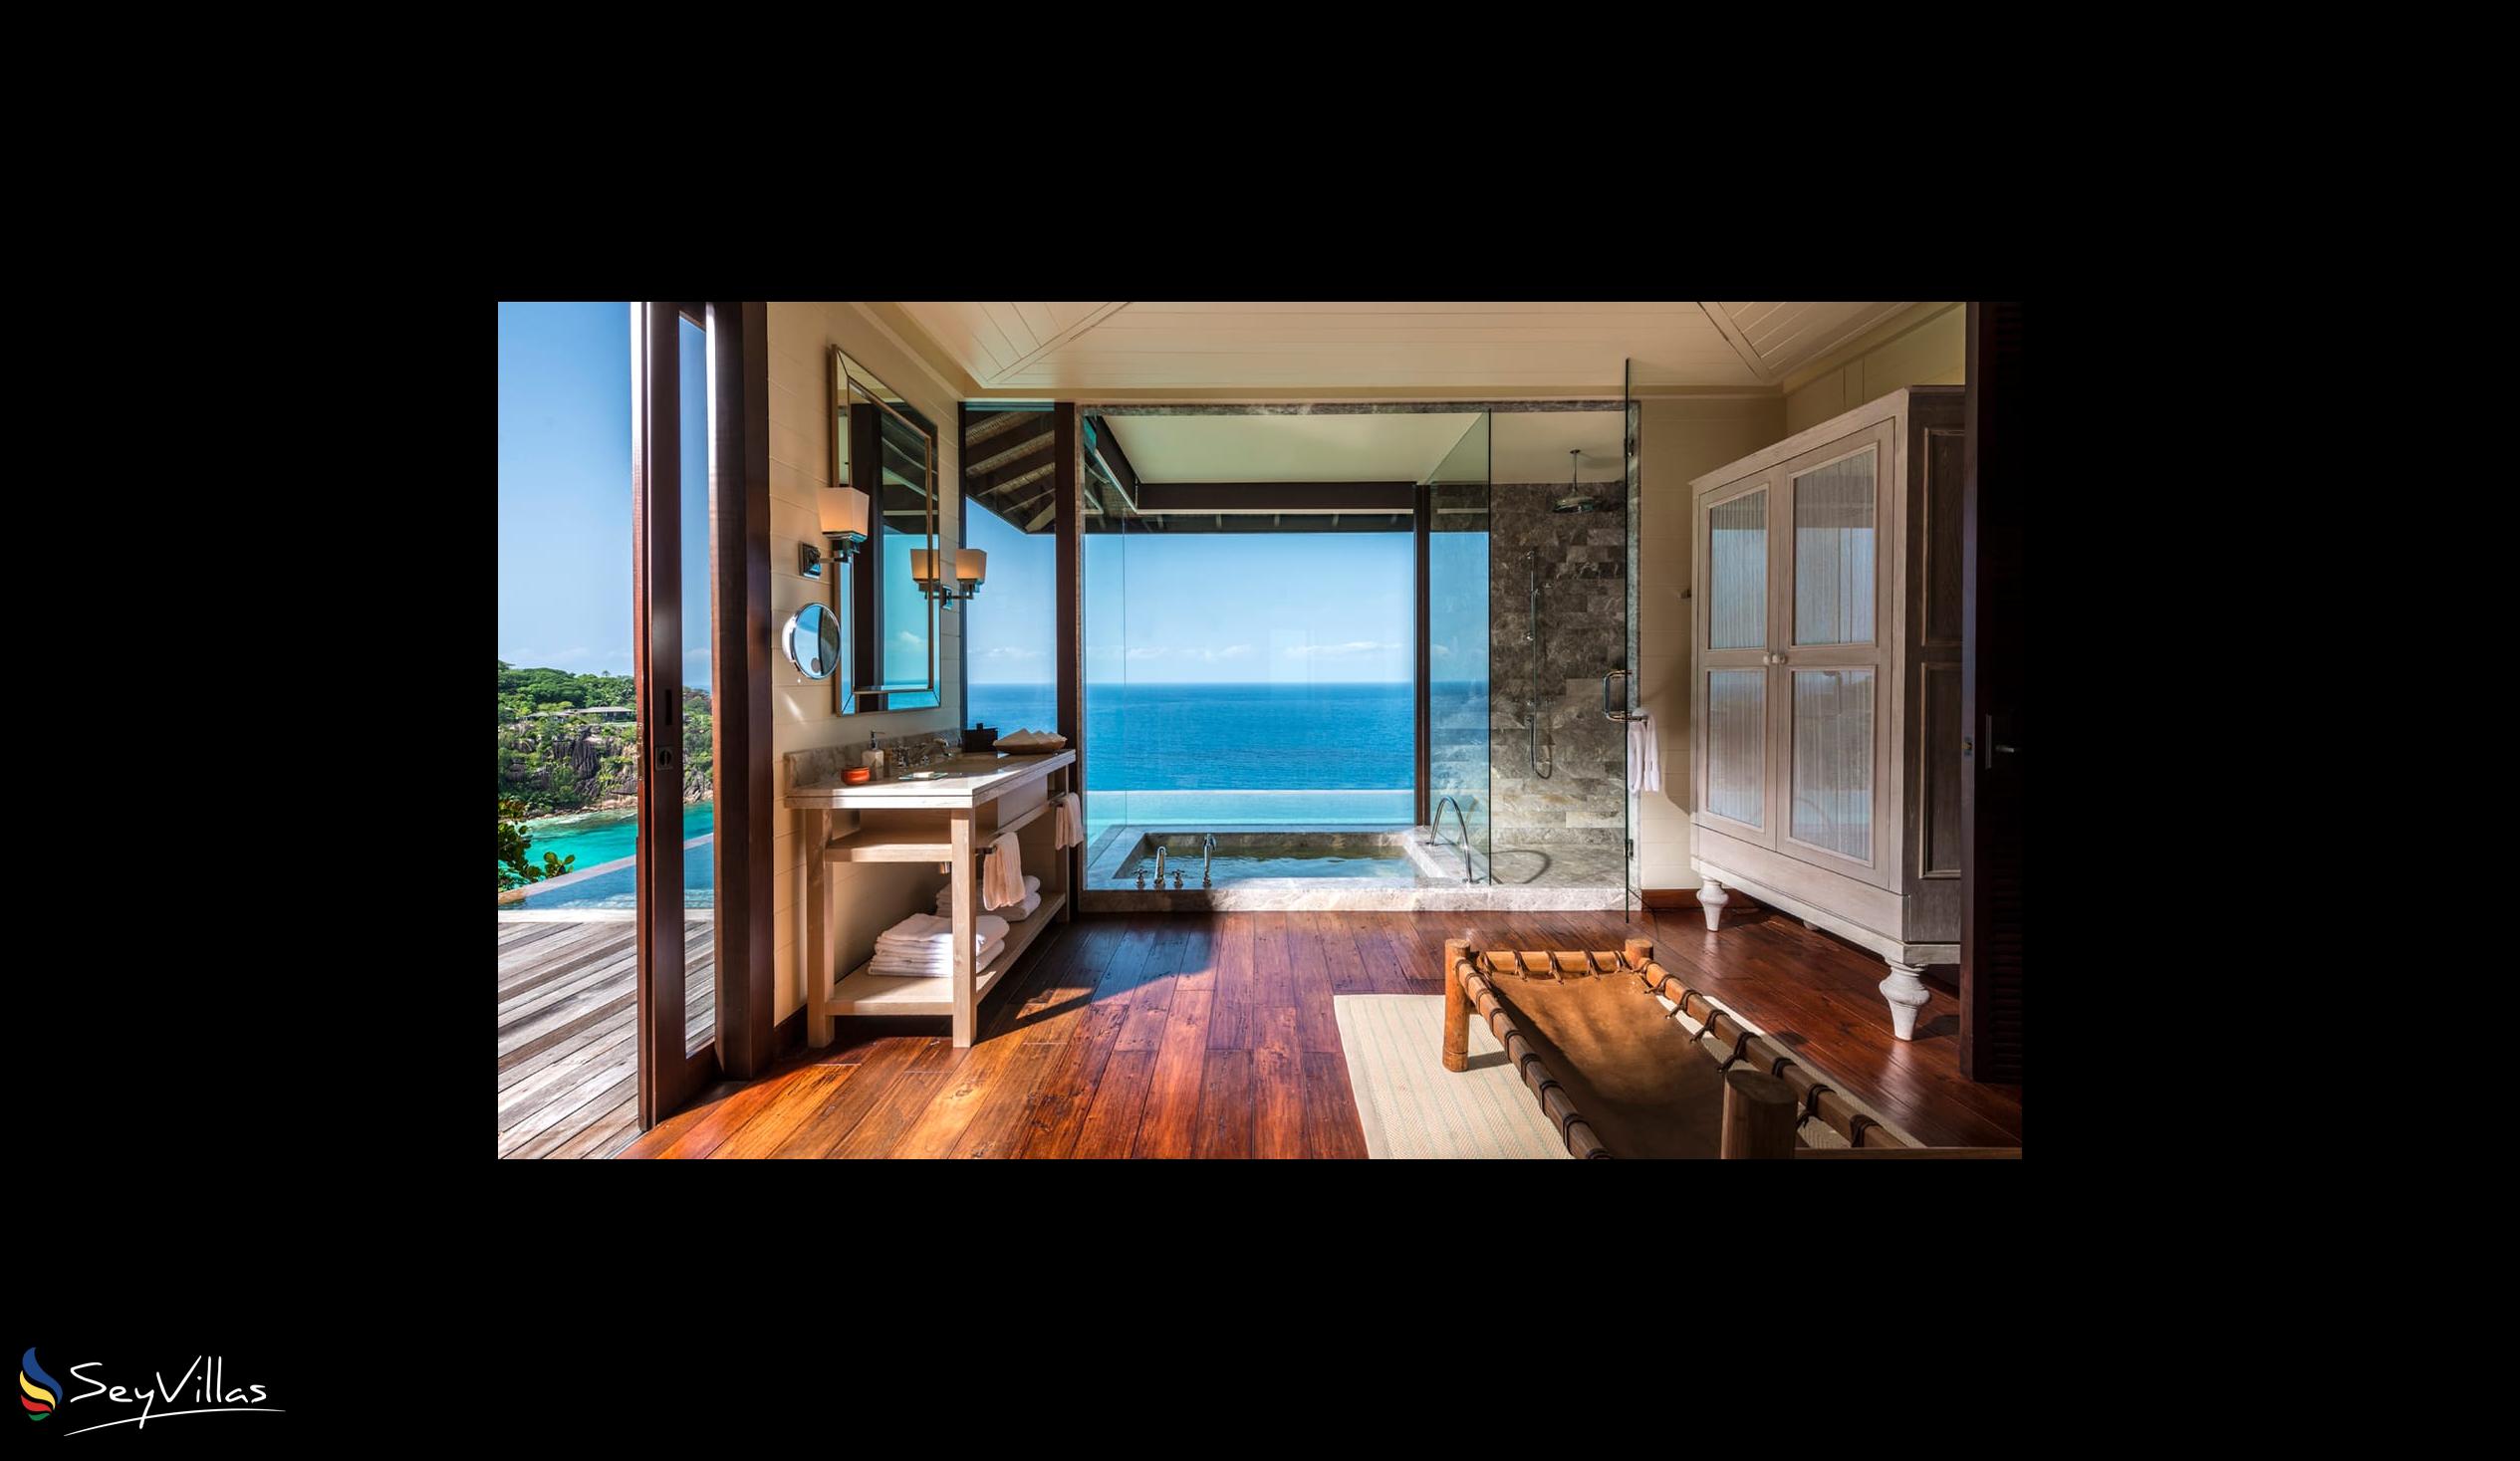 Foto 24: Four Seasons Resort - 2-Bedroom Hilltop Ocean View Suite - Mahé (Seychelles)